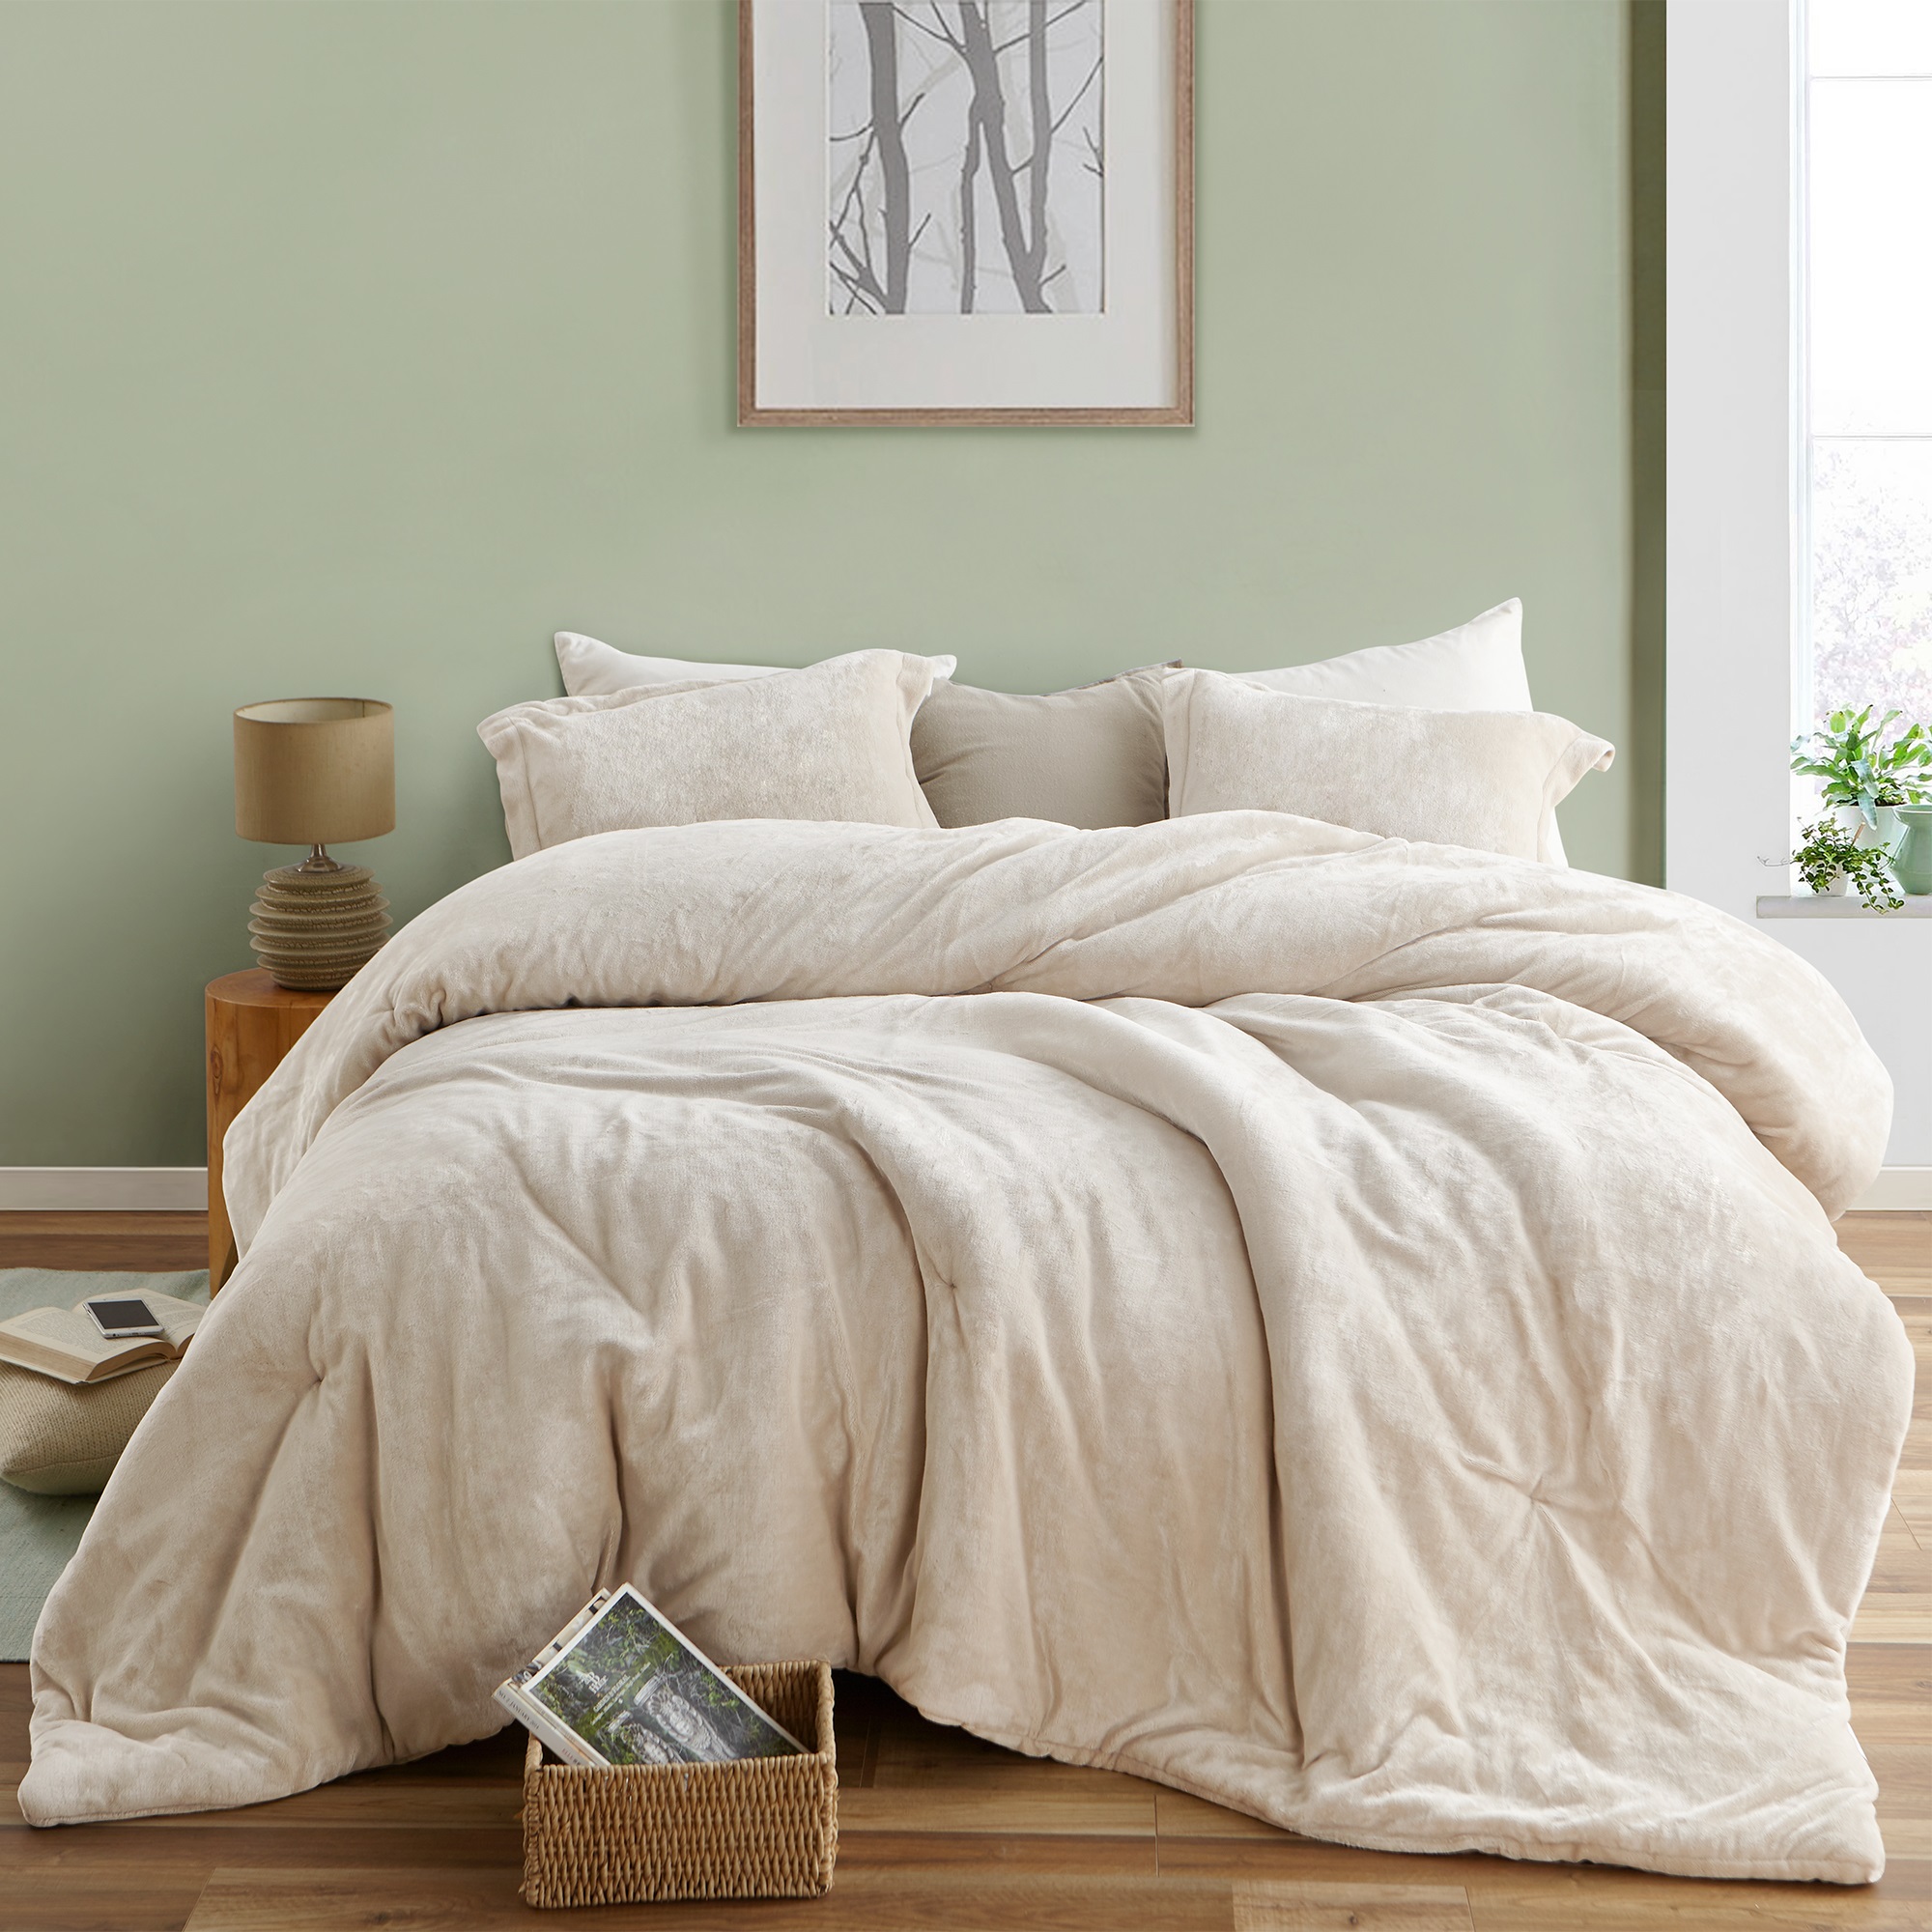 Coma Inducer Oversized Comforter - The Original Plush - Almond Milk